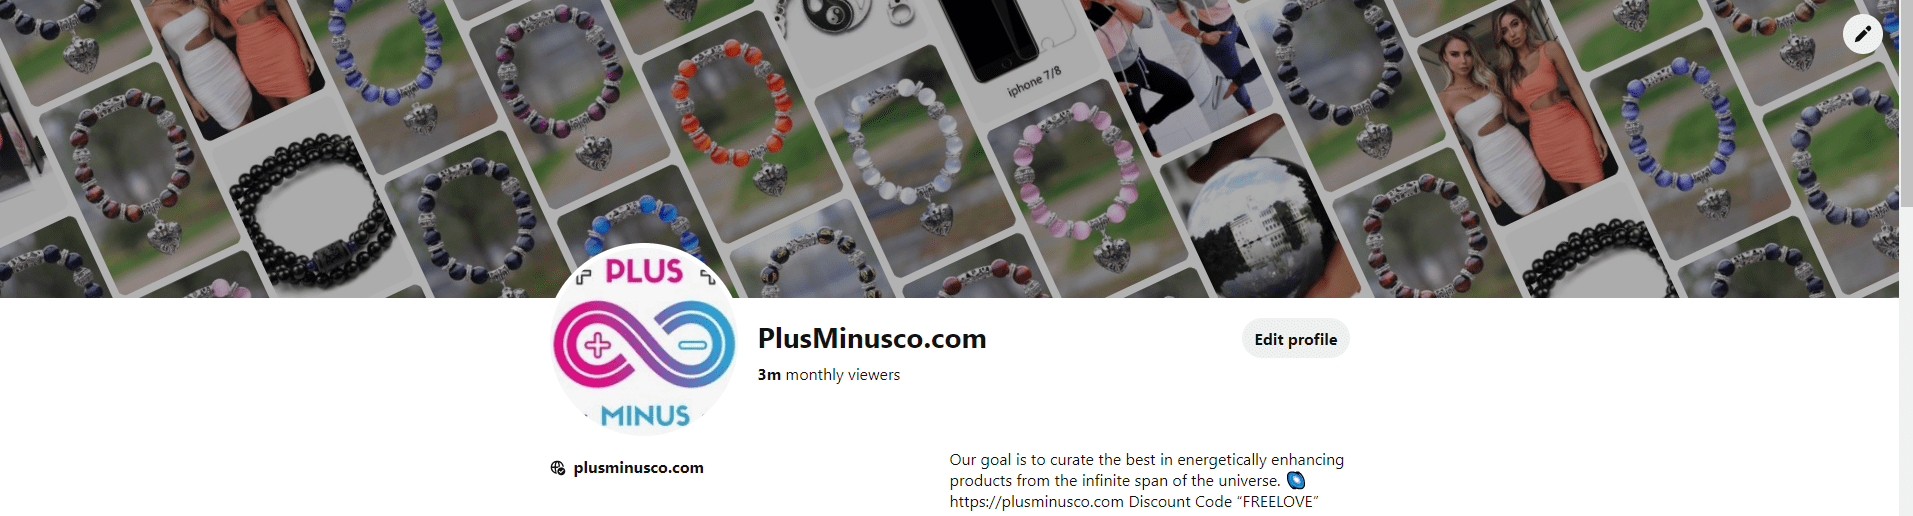 Bileklikler - plusminusco.com